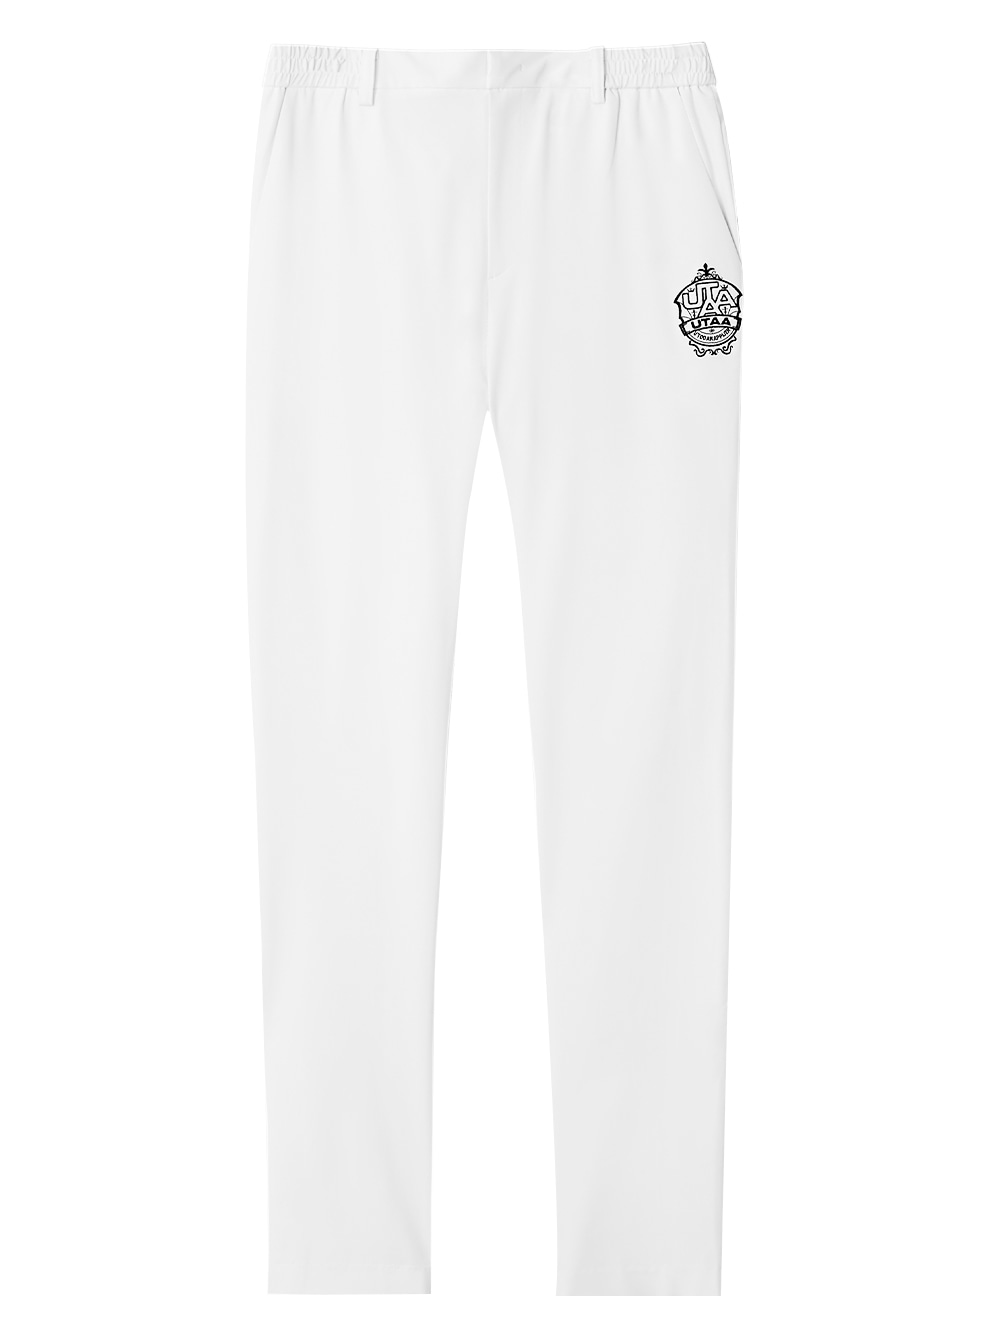 UTAA Egis Emblem Pants : Men&#039;s White (UB2PTM503WH)